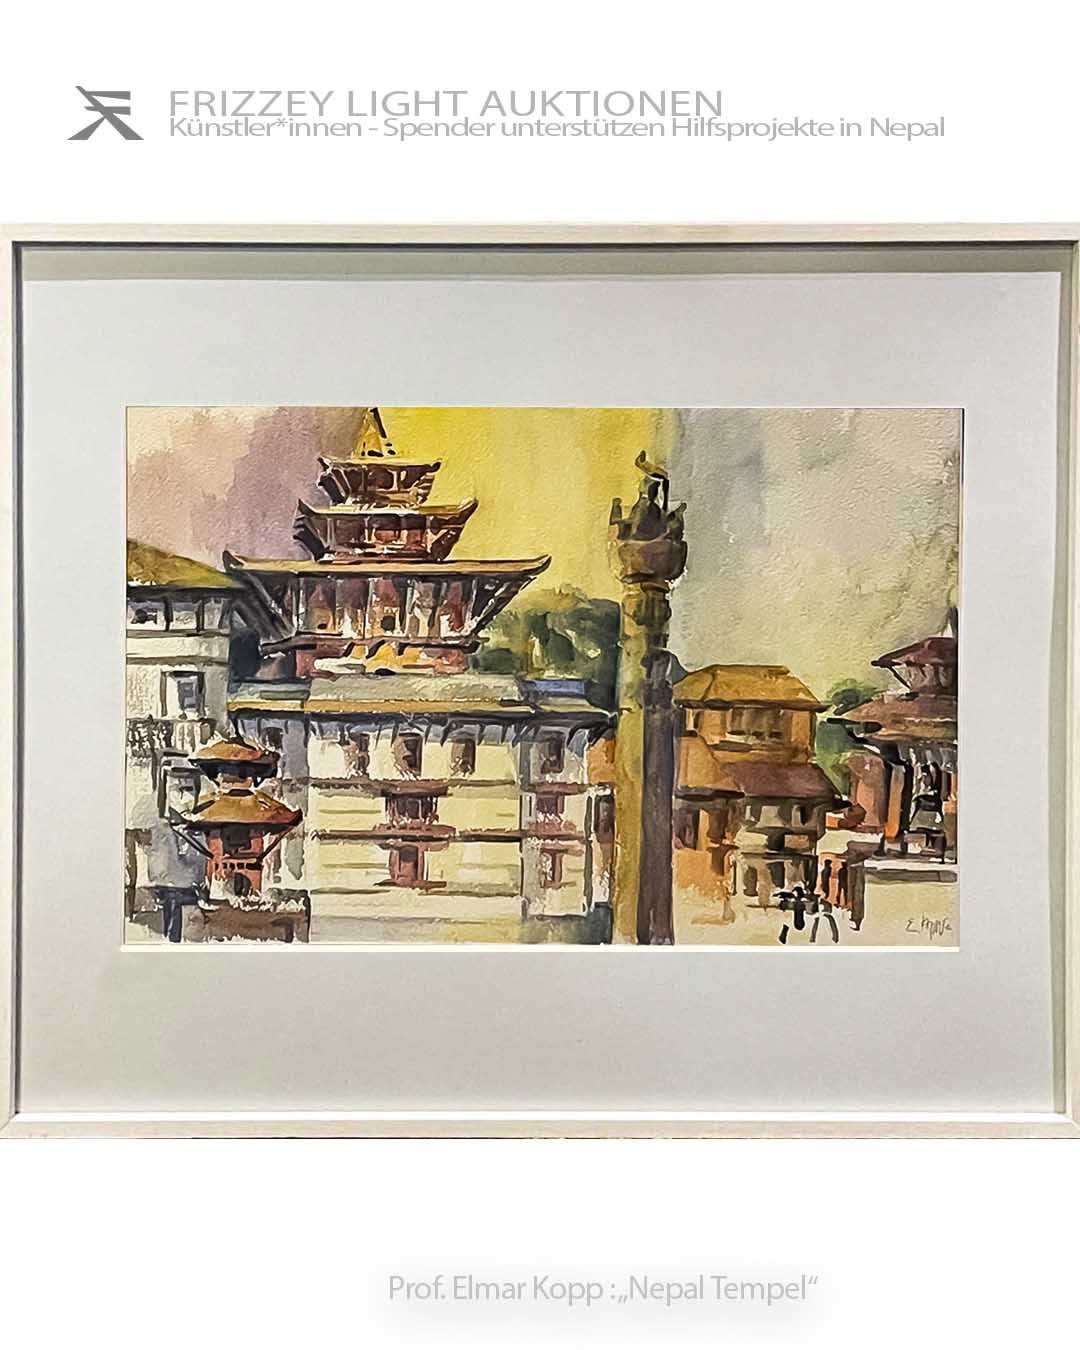 „Nepal Tempel“ by Prof. Elmar Kopp